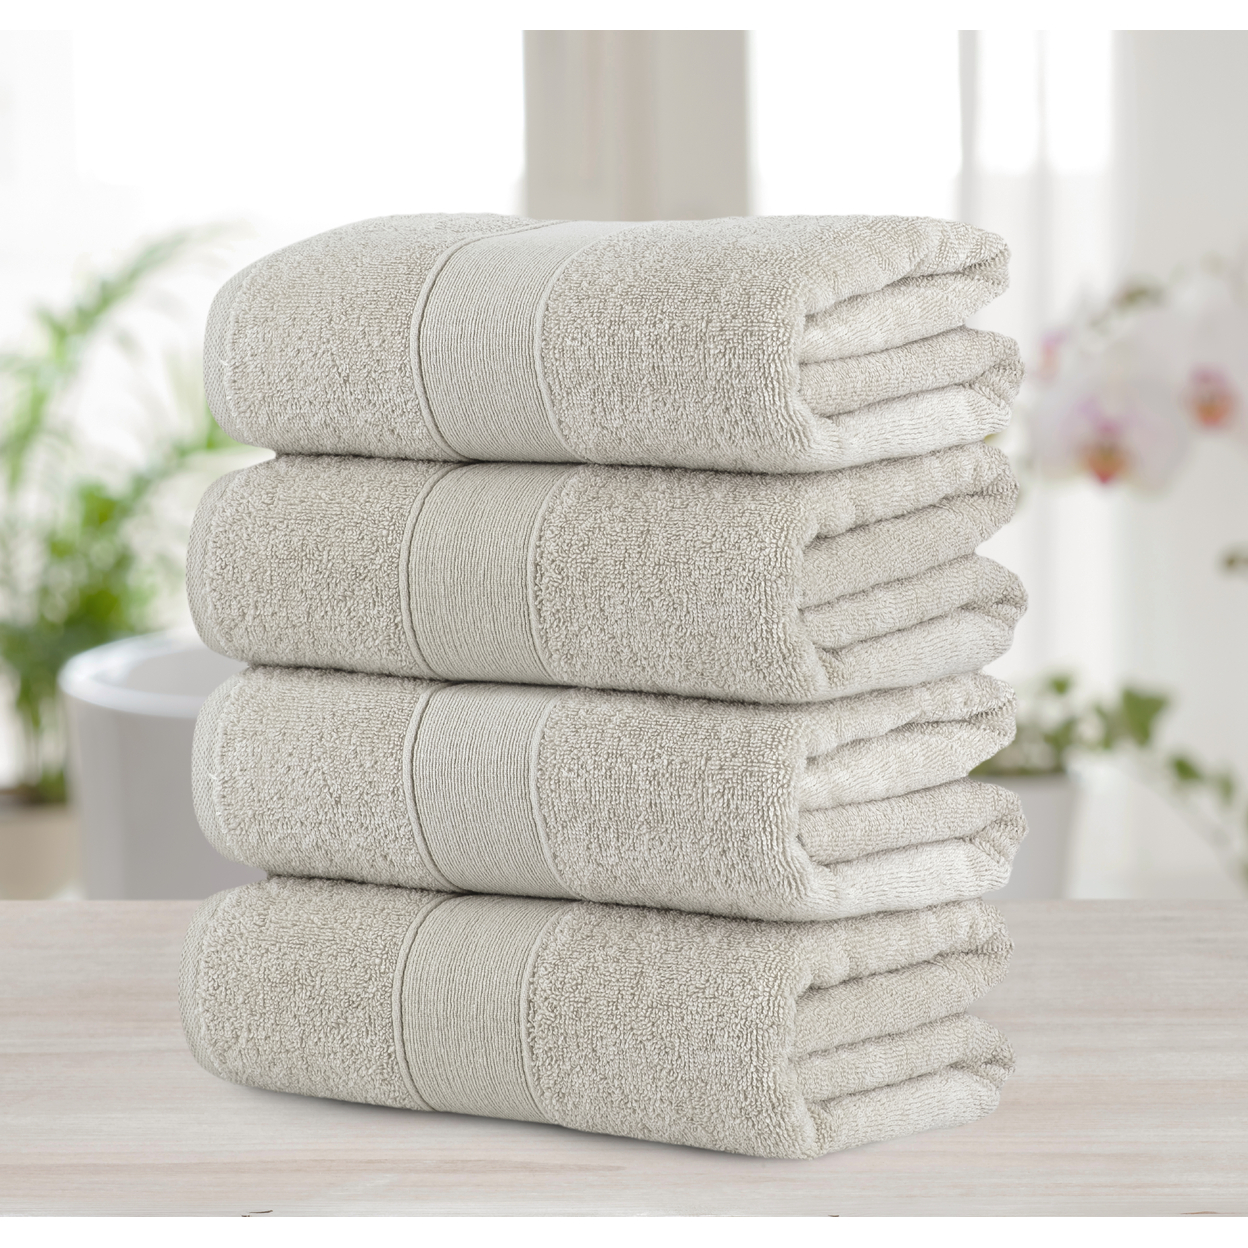 Chic Home Luxurious 4-Piece 100% Pure Turkish Cotton Bath Towels, 30 X 54, Dobby Border Design, OEKO-TEX Certified Set - Taupe